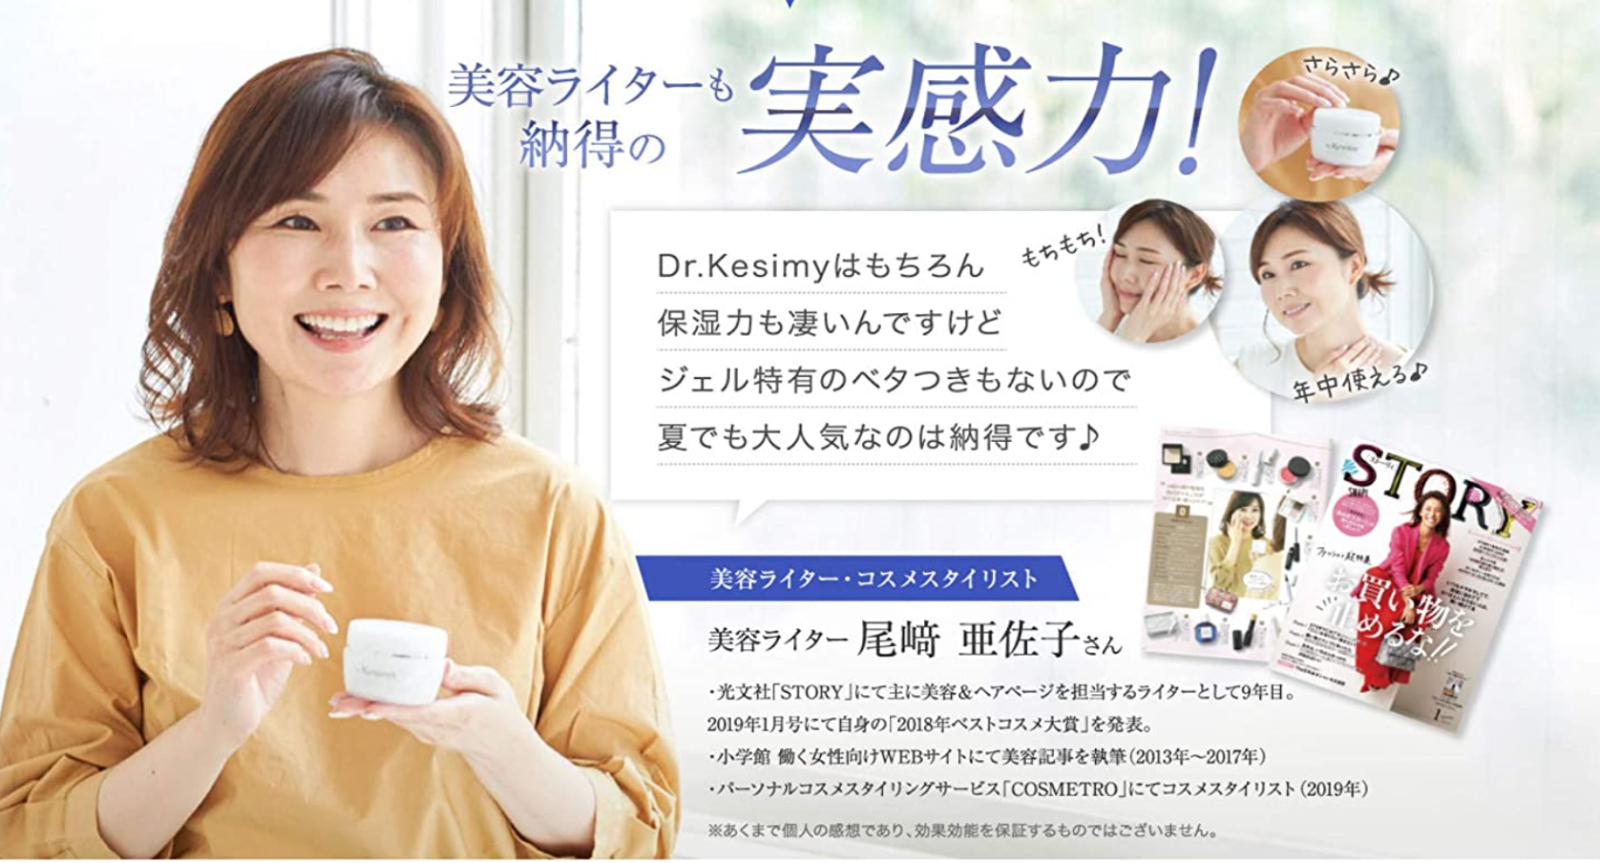 Dr.Kesimy GO 60g whitening cream for prevention of the brown spot 